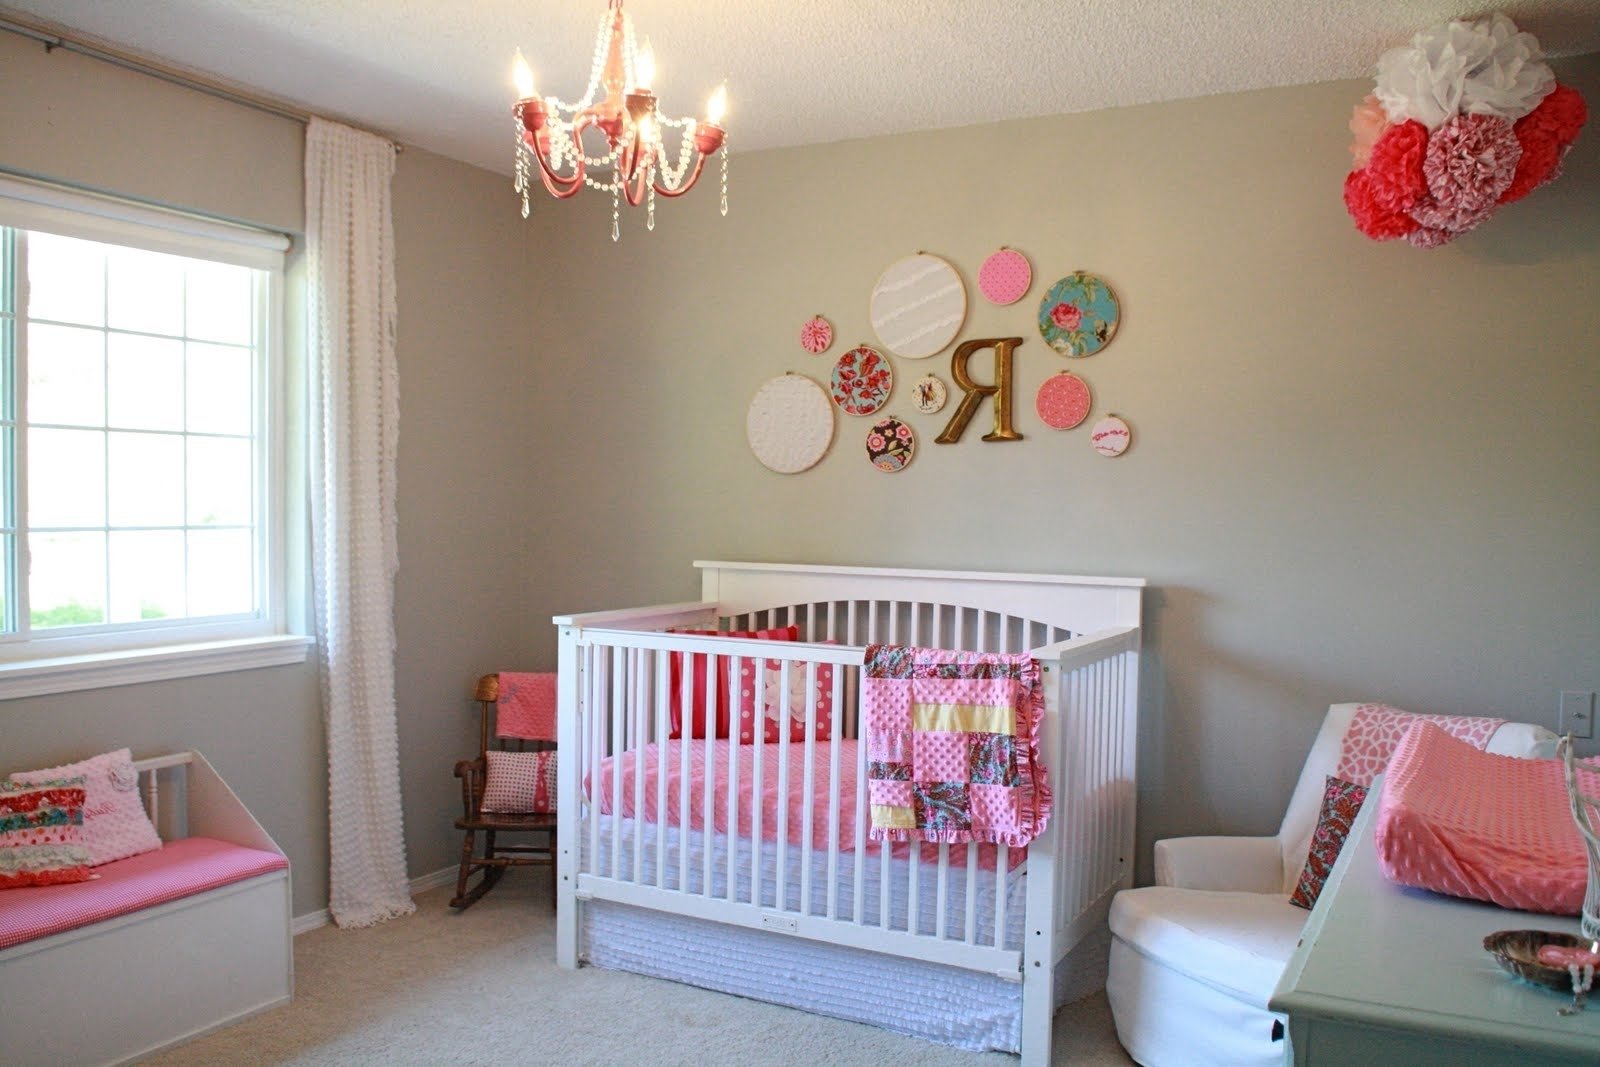 10 Beautiful Baby Girl Nursery Ideas Pinterest breathtaking baby girl room decor ideas 29 84 rooms 1000 about on 2022